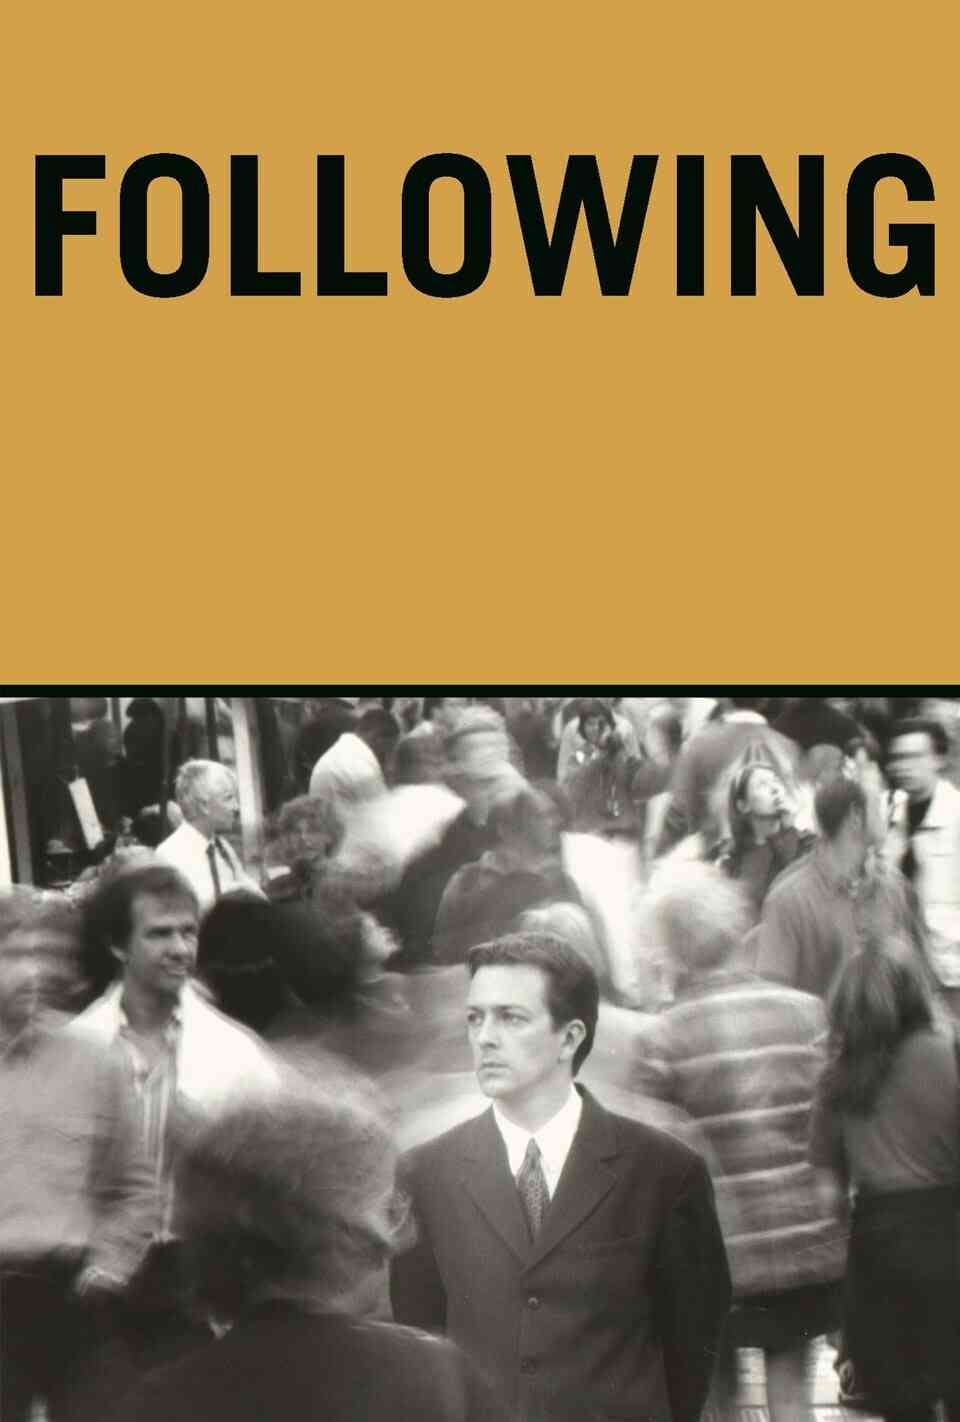 Read Following screenplay (poster)